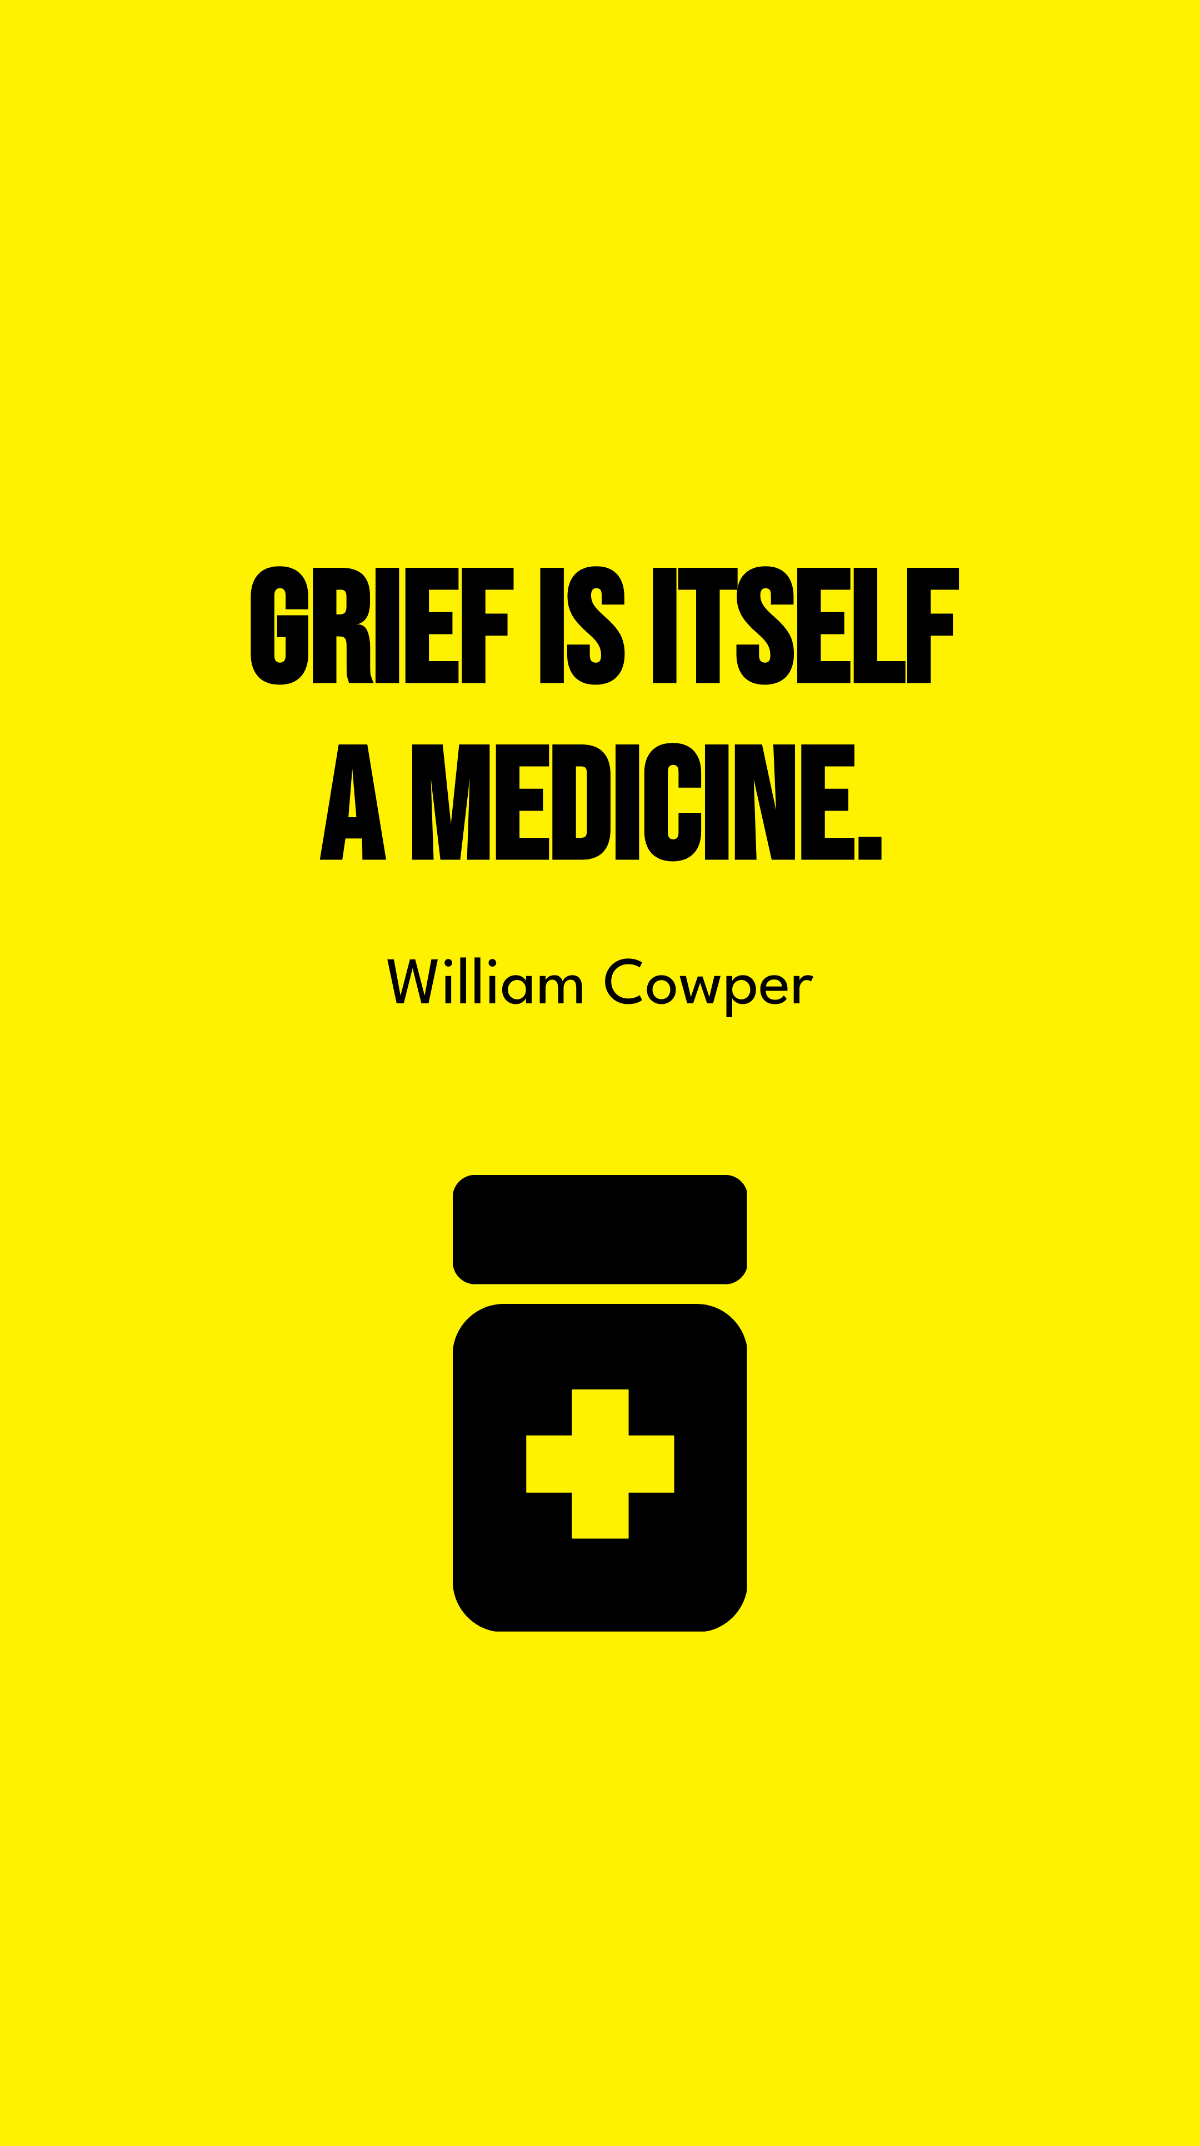 William Cowper - Grief is itself a medicine. Template